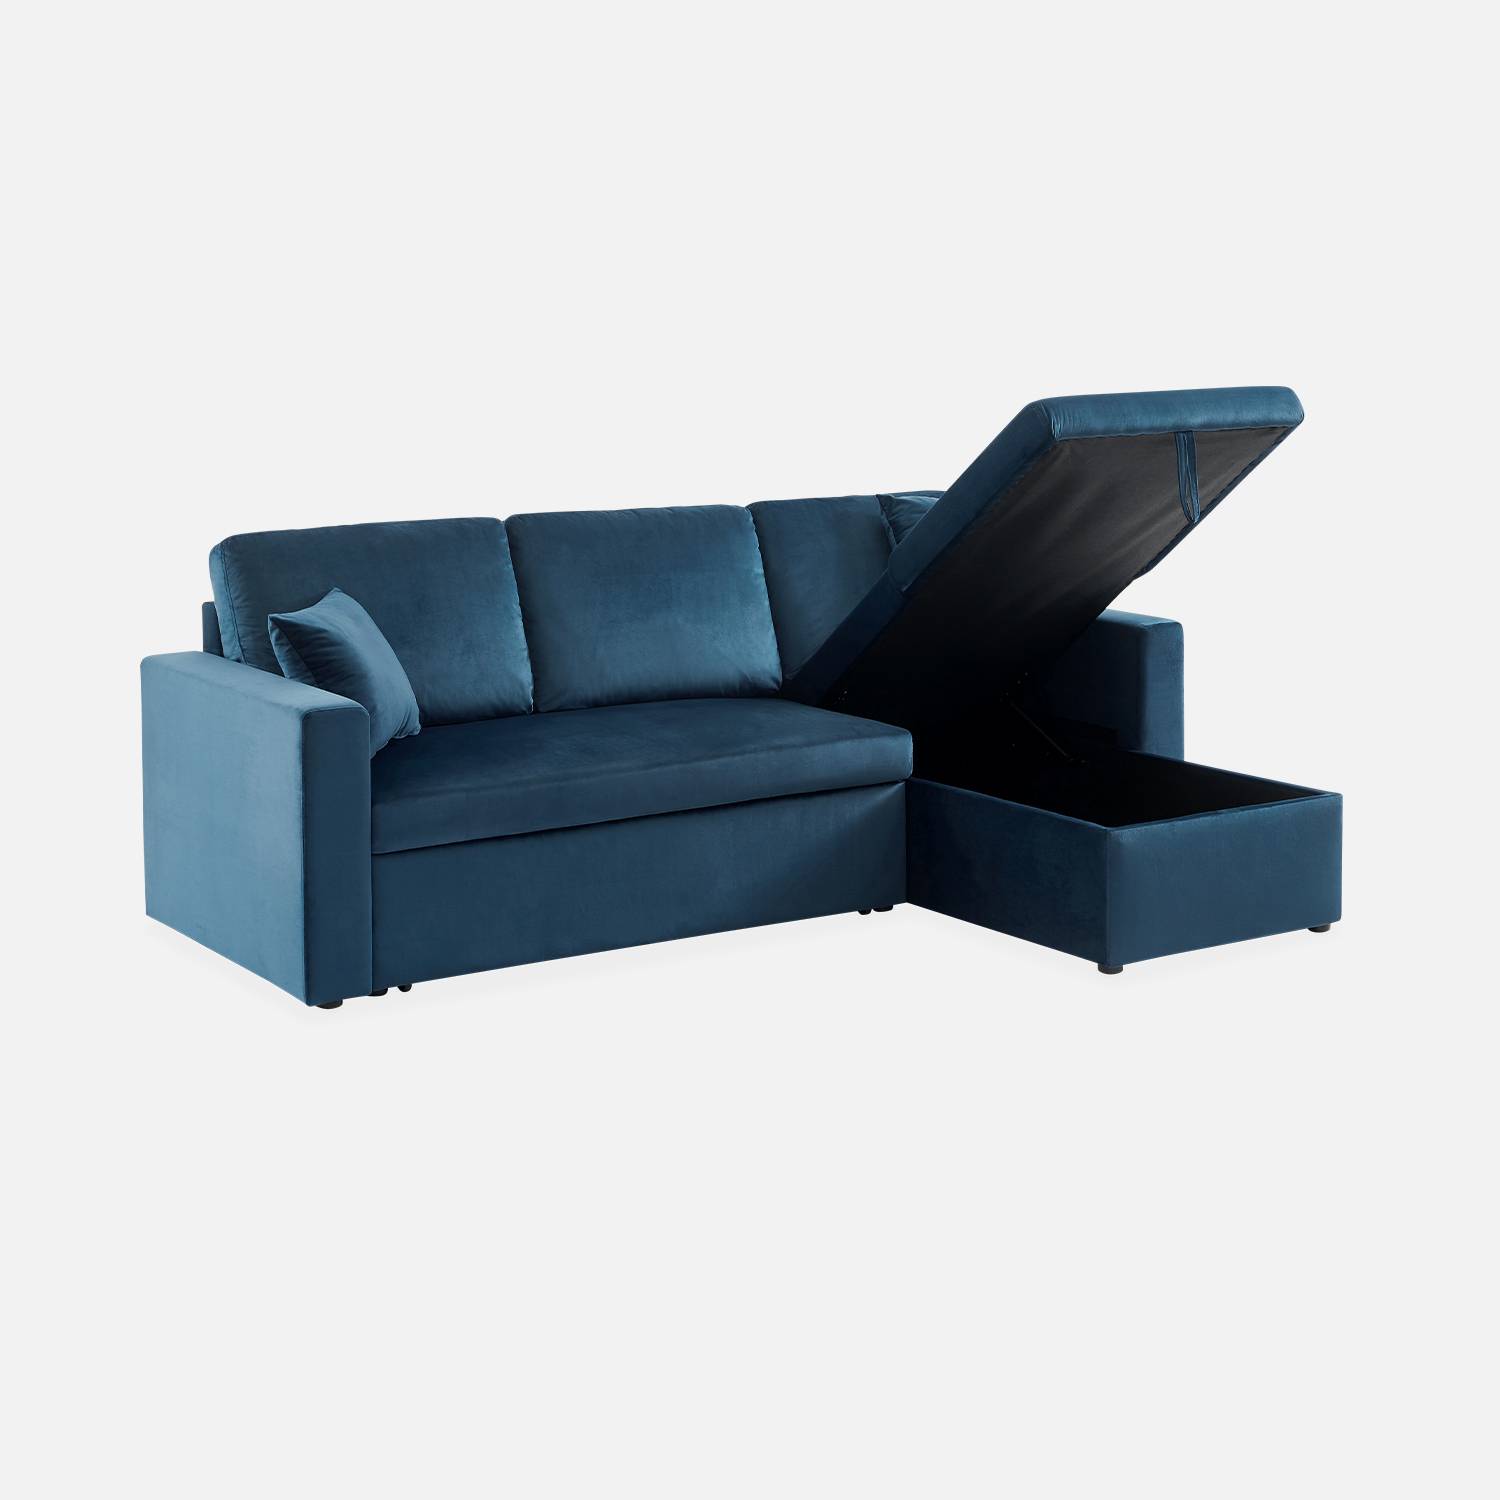 Petroleumblauwe velours bedbank met chaise longue en opbergruimte - IDA - 3-zits, omkeerbare hoeksalon, opbergruimte, zetelbed Photo6